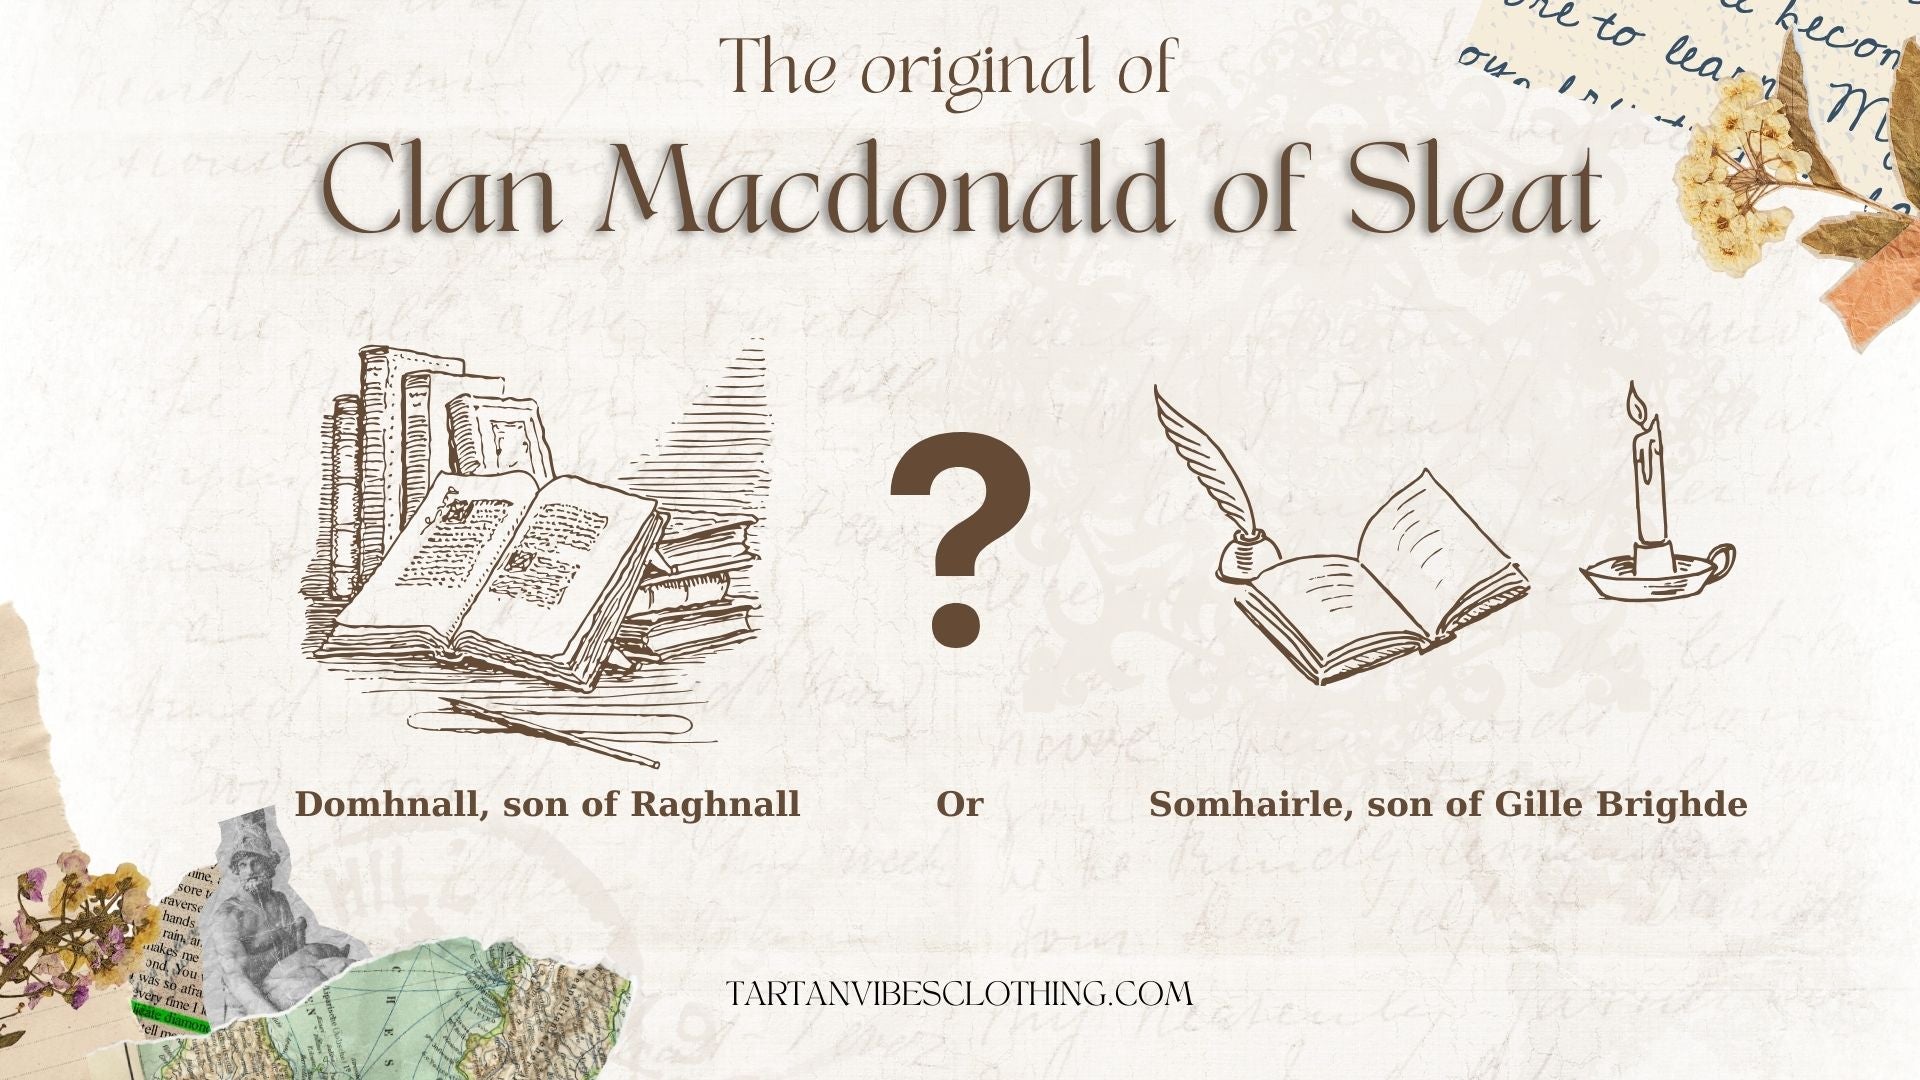 The original of Clan Macdonald of Sleat